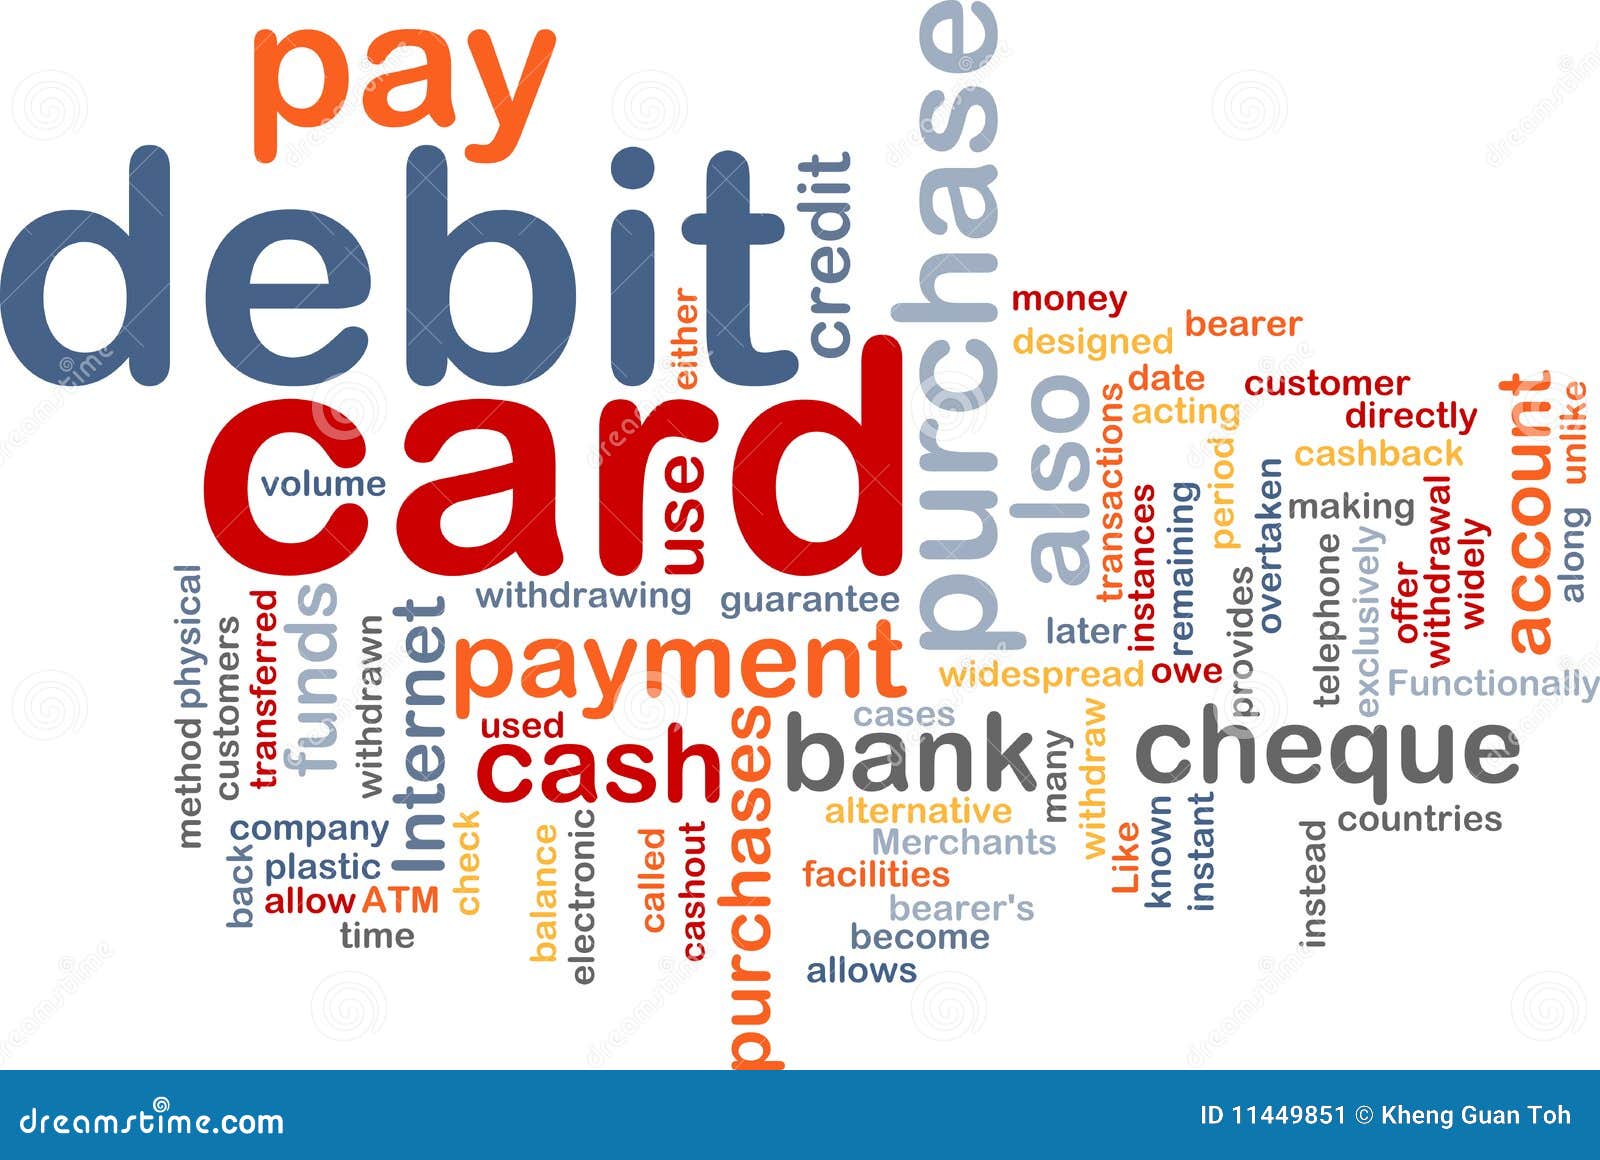 debit card word cloud